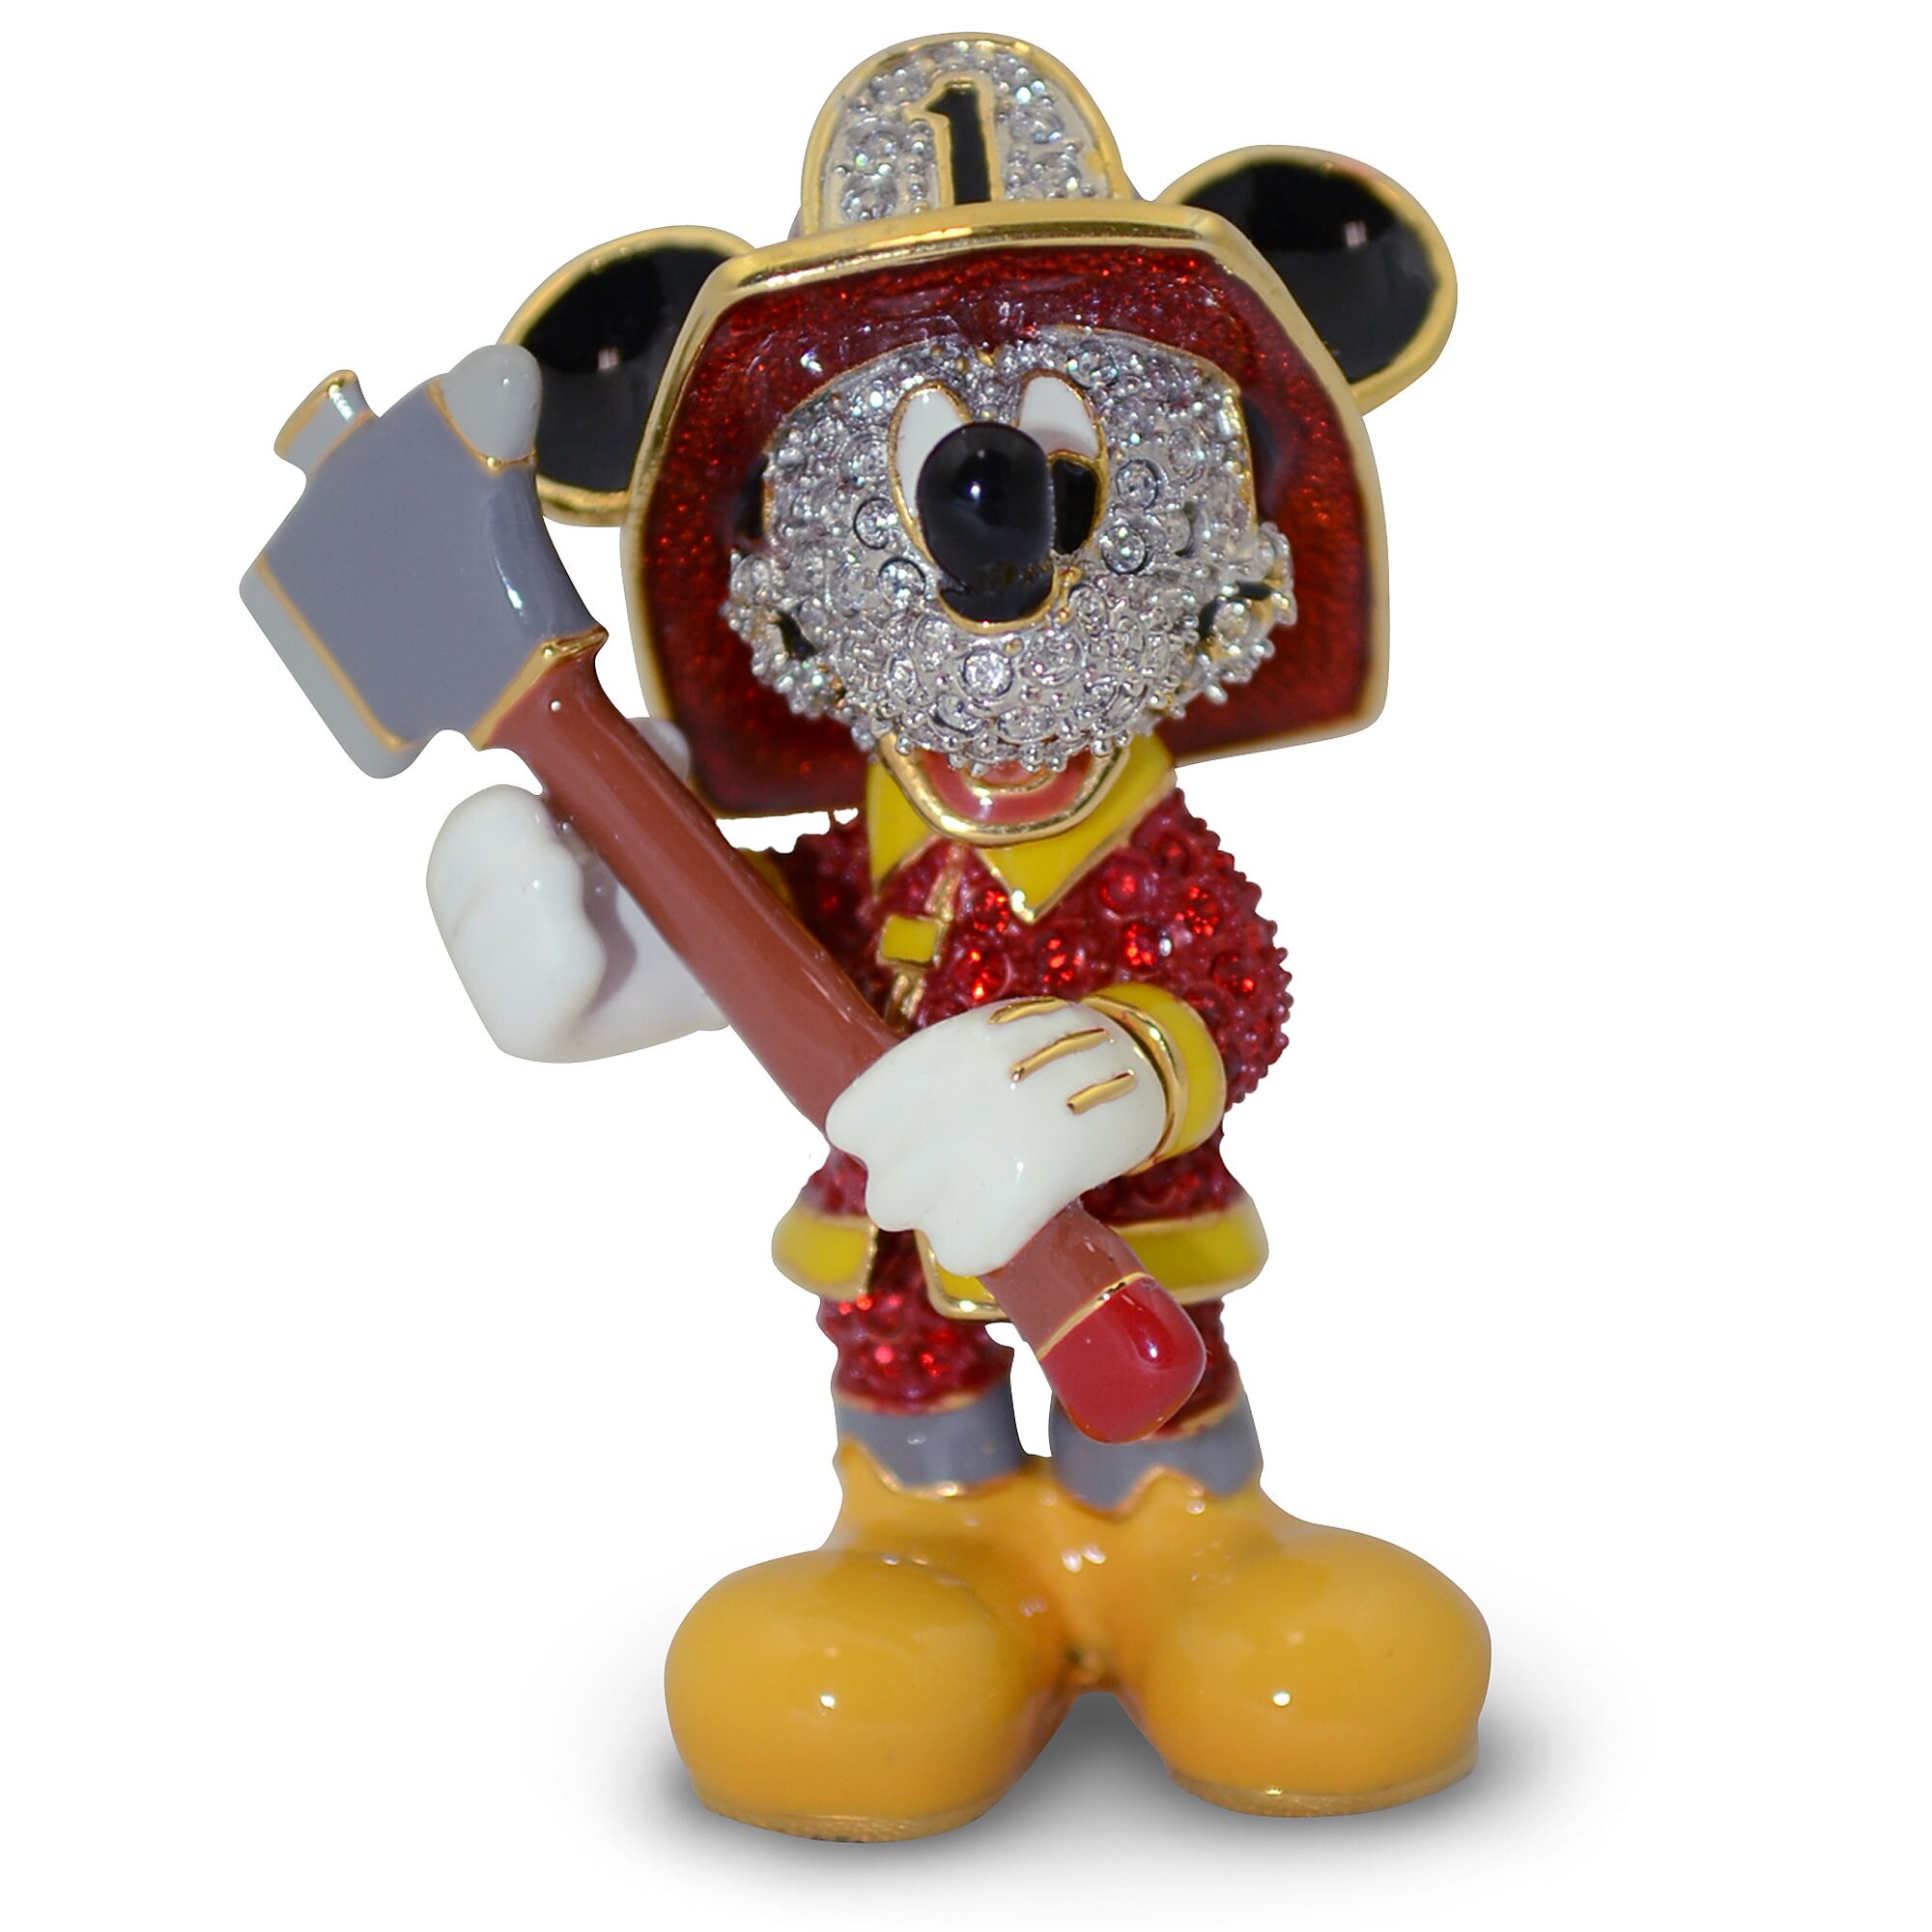 Fireman Mickey Mouse Figurine by Arribas - Jeweled